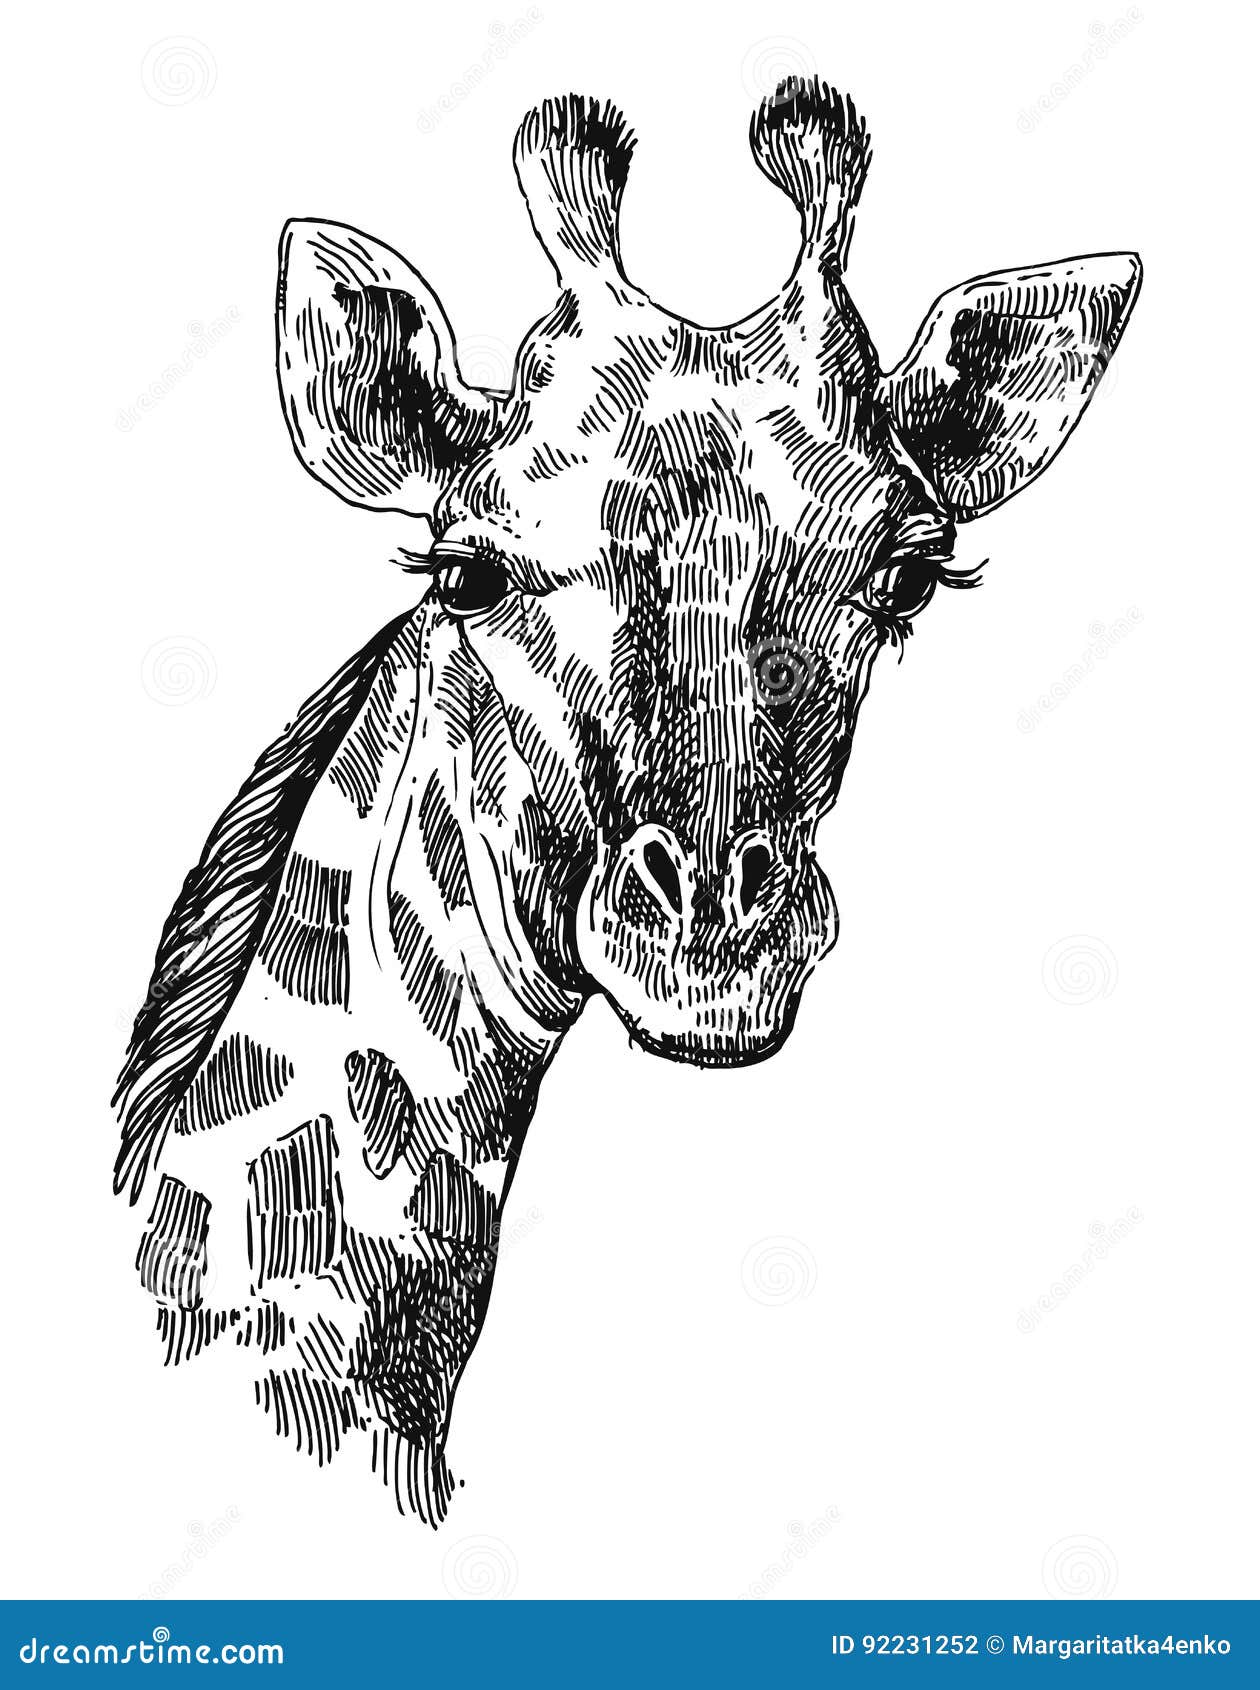 Giraffe Pencil Drawing - How to Sketch Giraffe using Pencils :  DrawingTutorials101.com